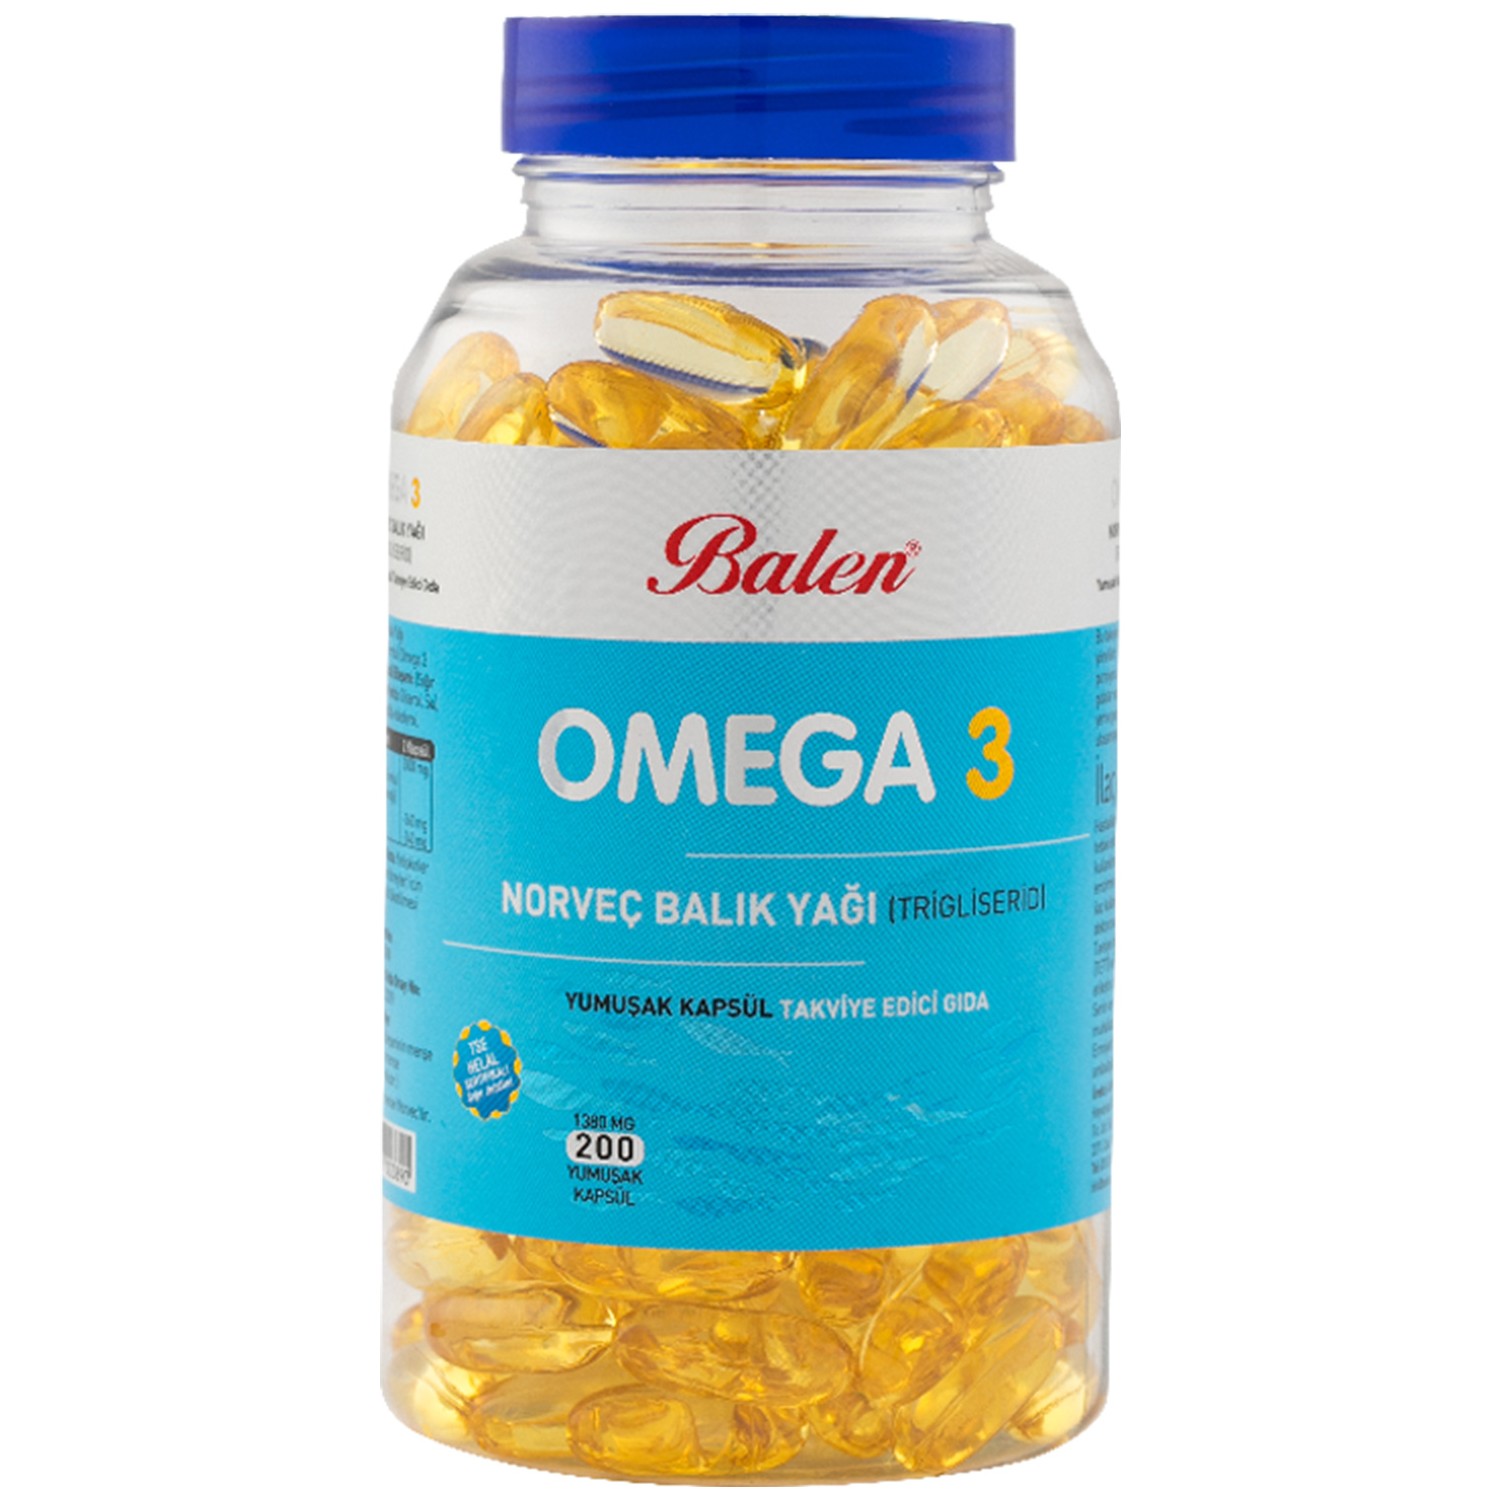 Норвежский рыбий жир Balen Omega-3 (триглицерид) 1380 мг, 200 капсул рыбий жир blackmores 1000 мг 200 капсул